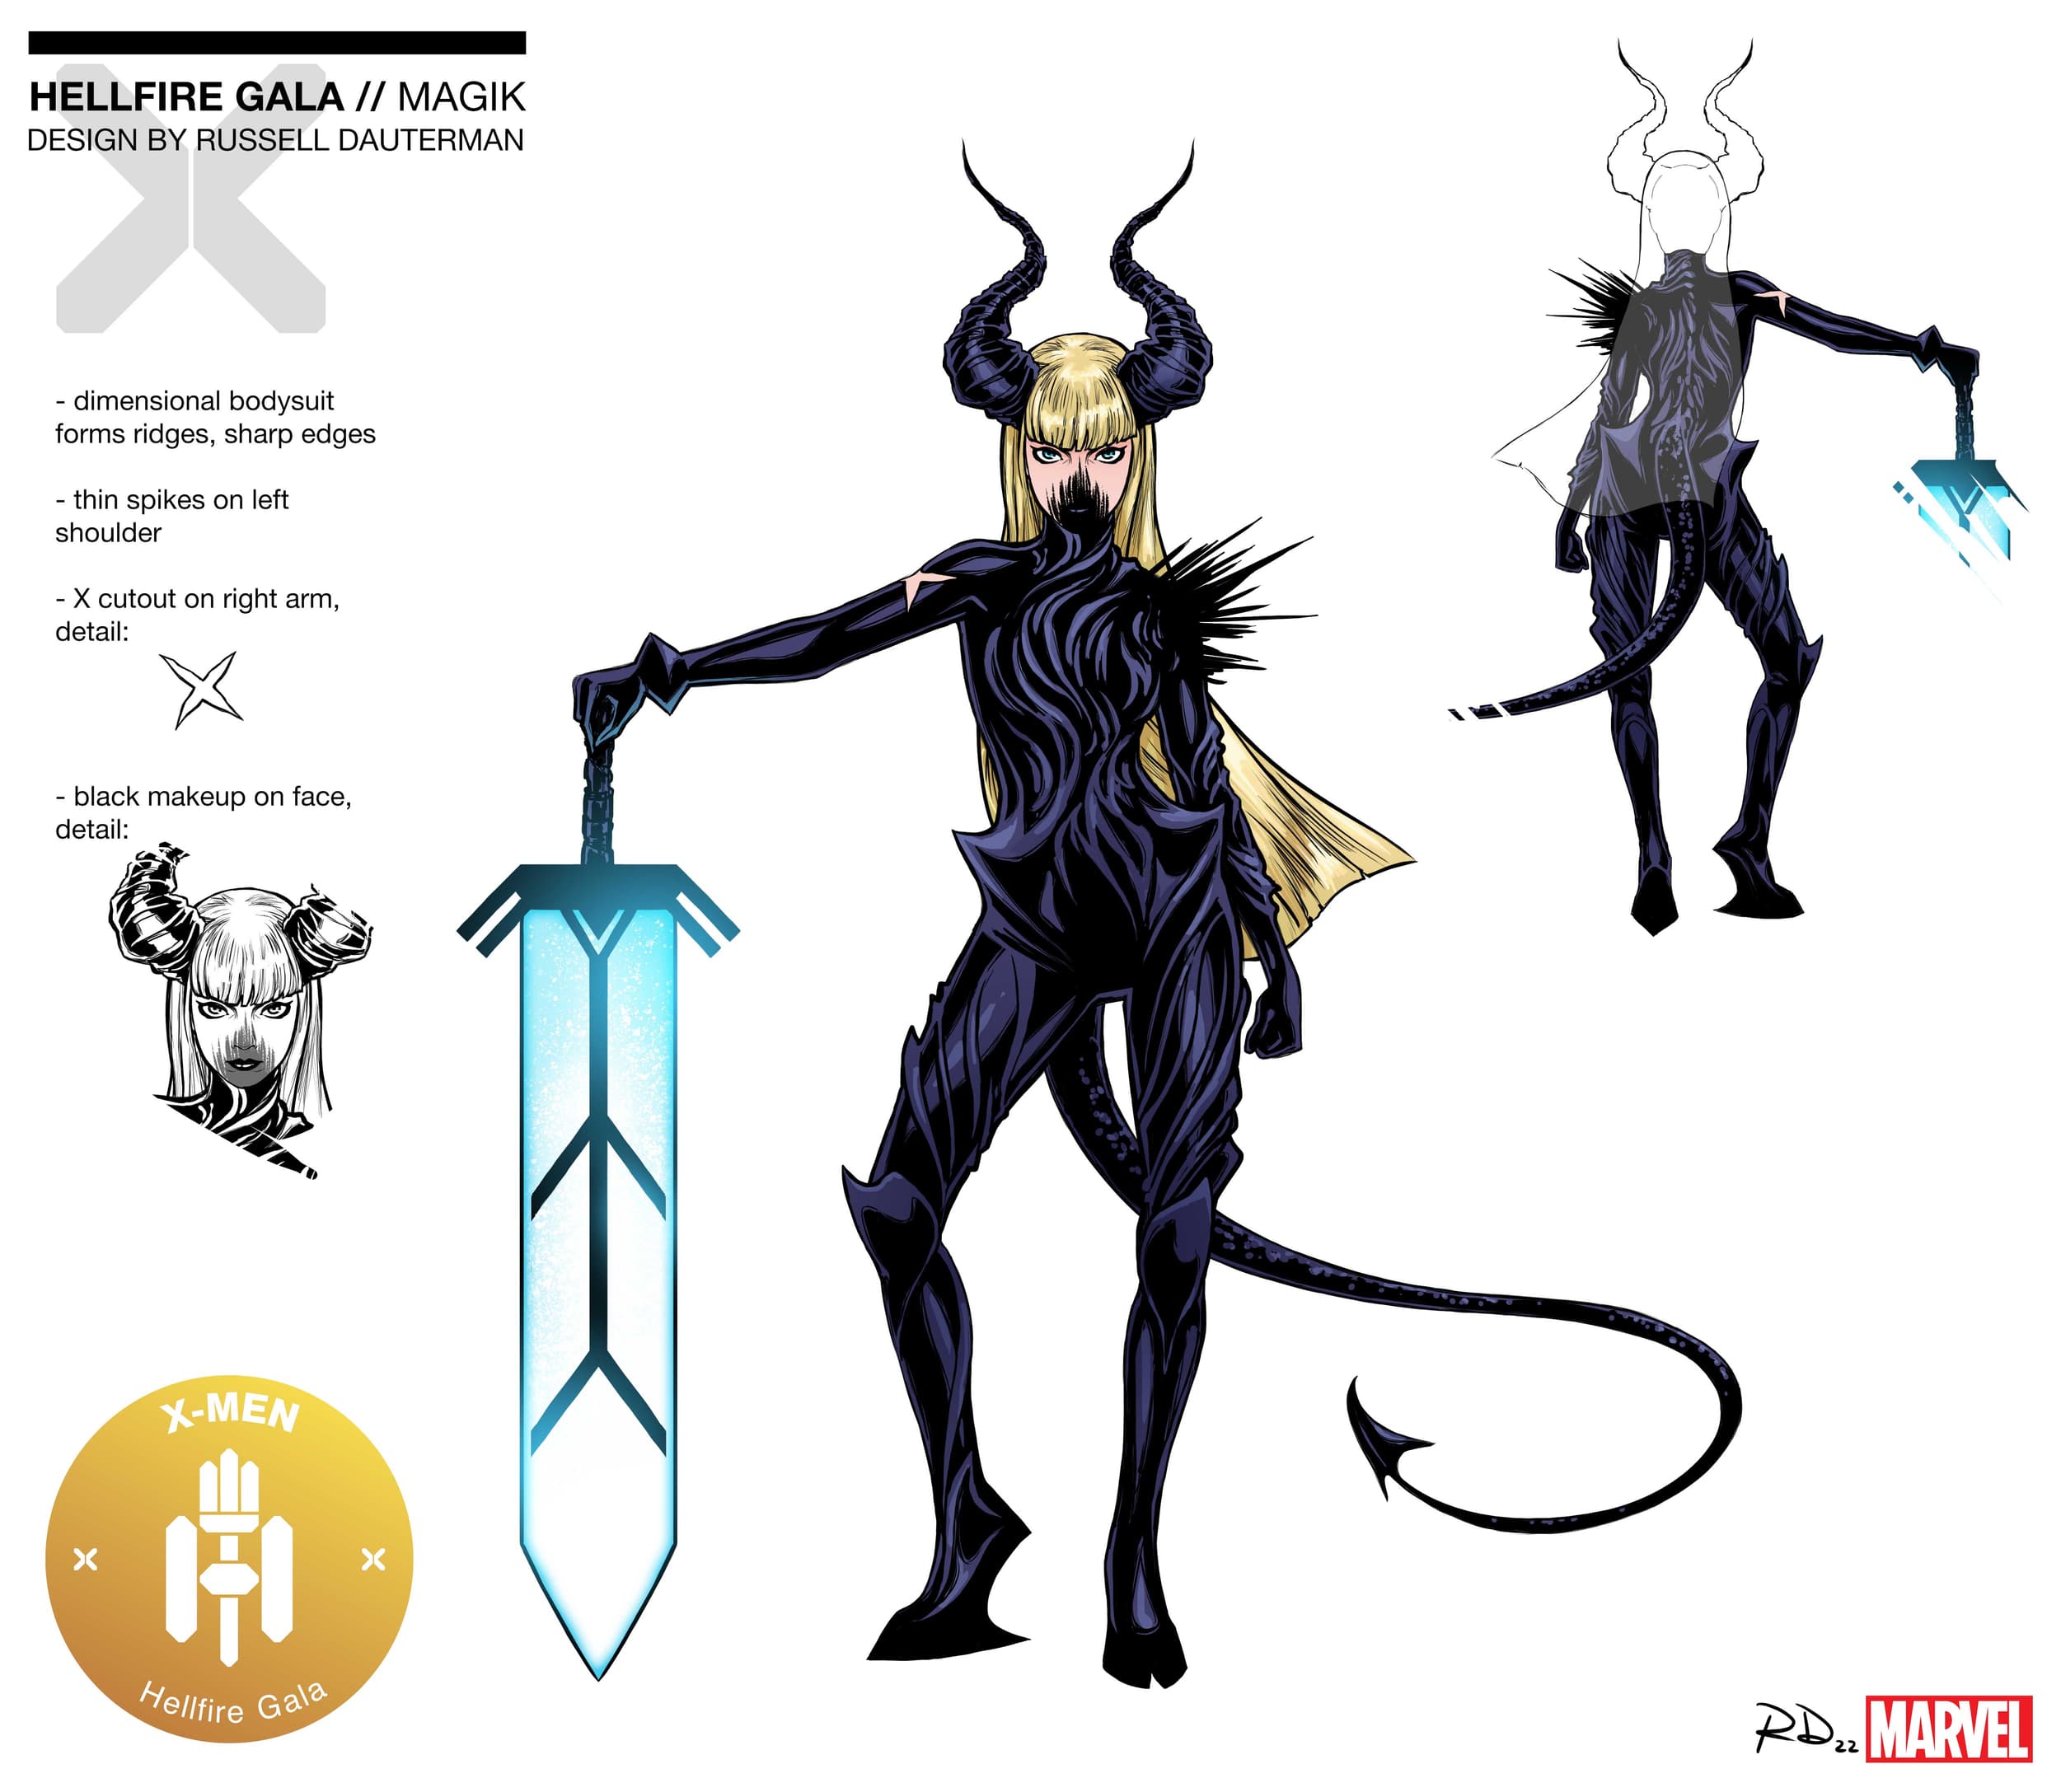 Magik Hellfire Gala 2022 Design by Russell Dauterman